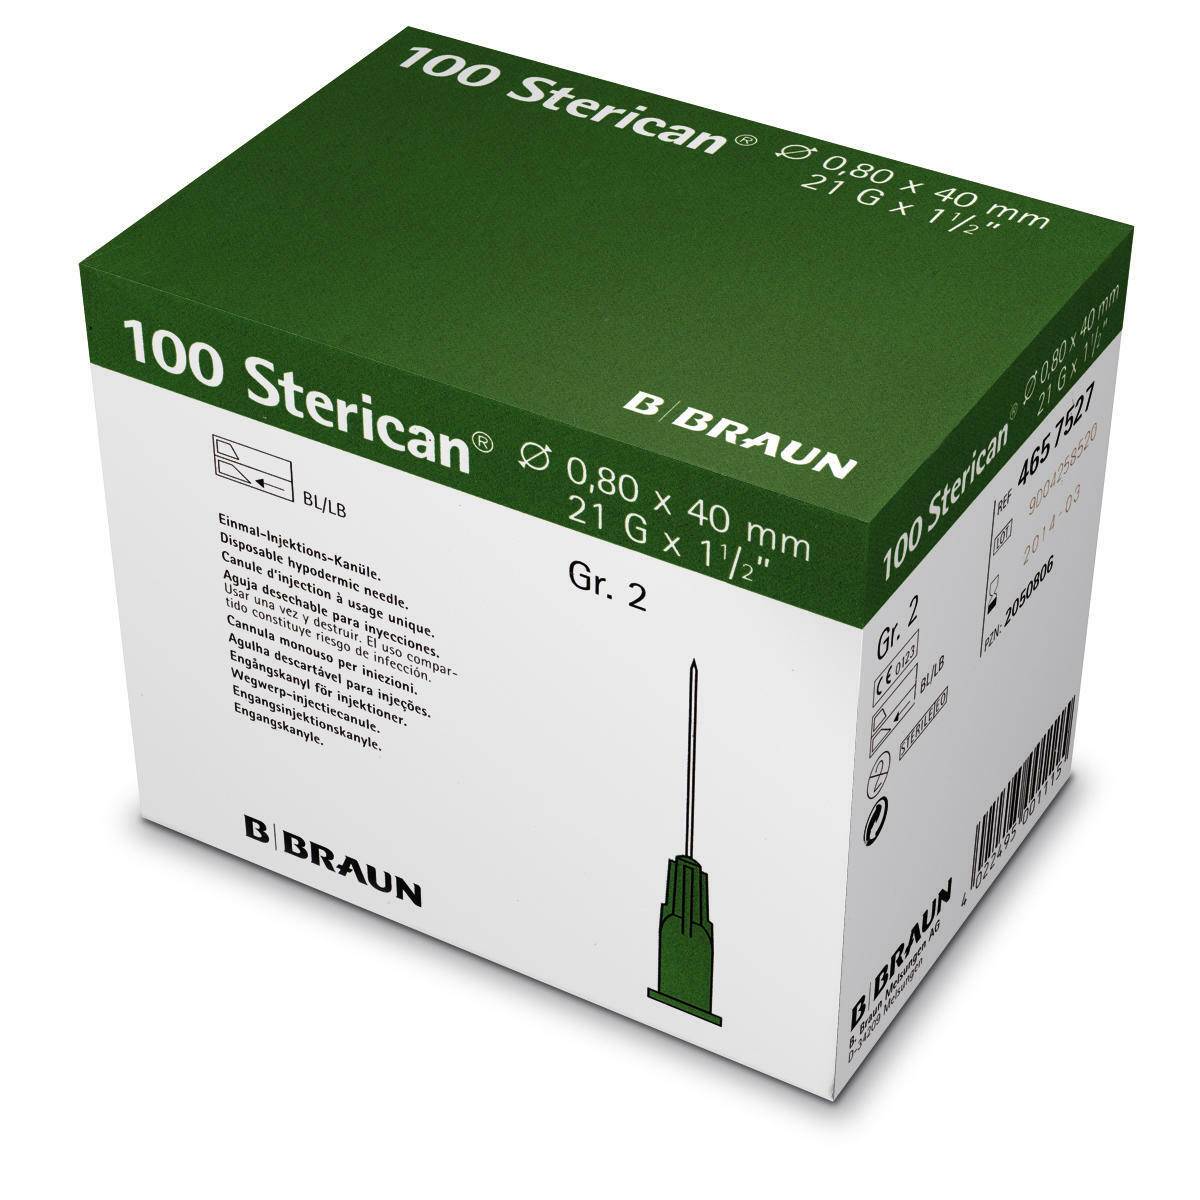 21g Green 1.5 inch BBraun Sterican Needles